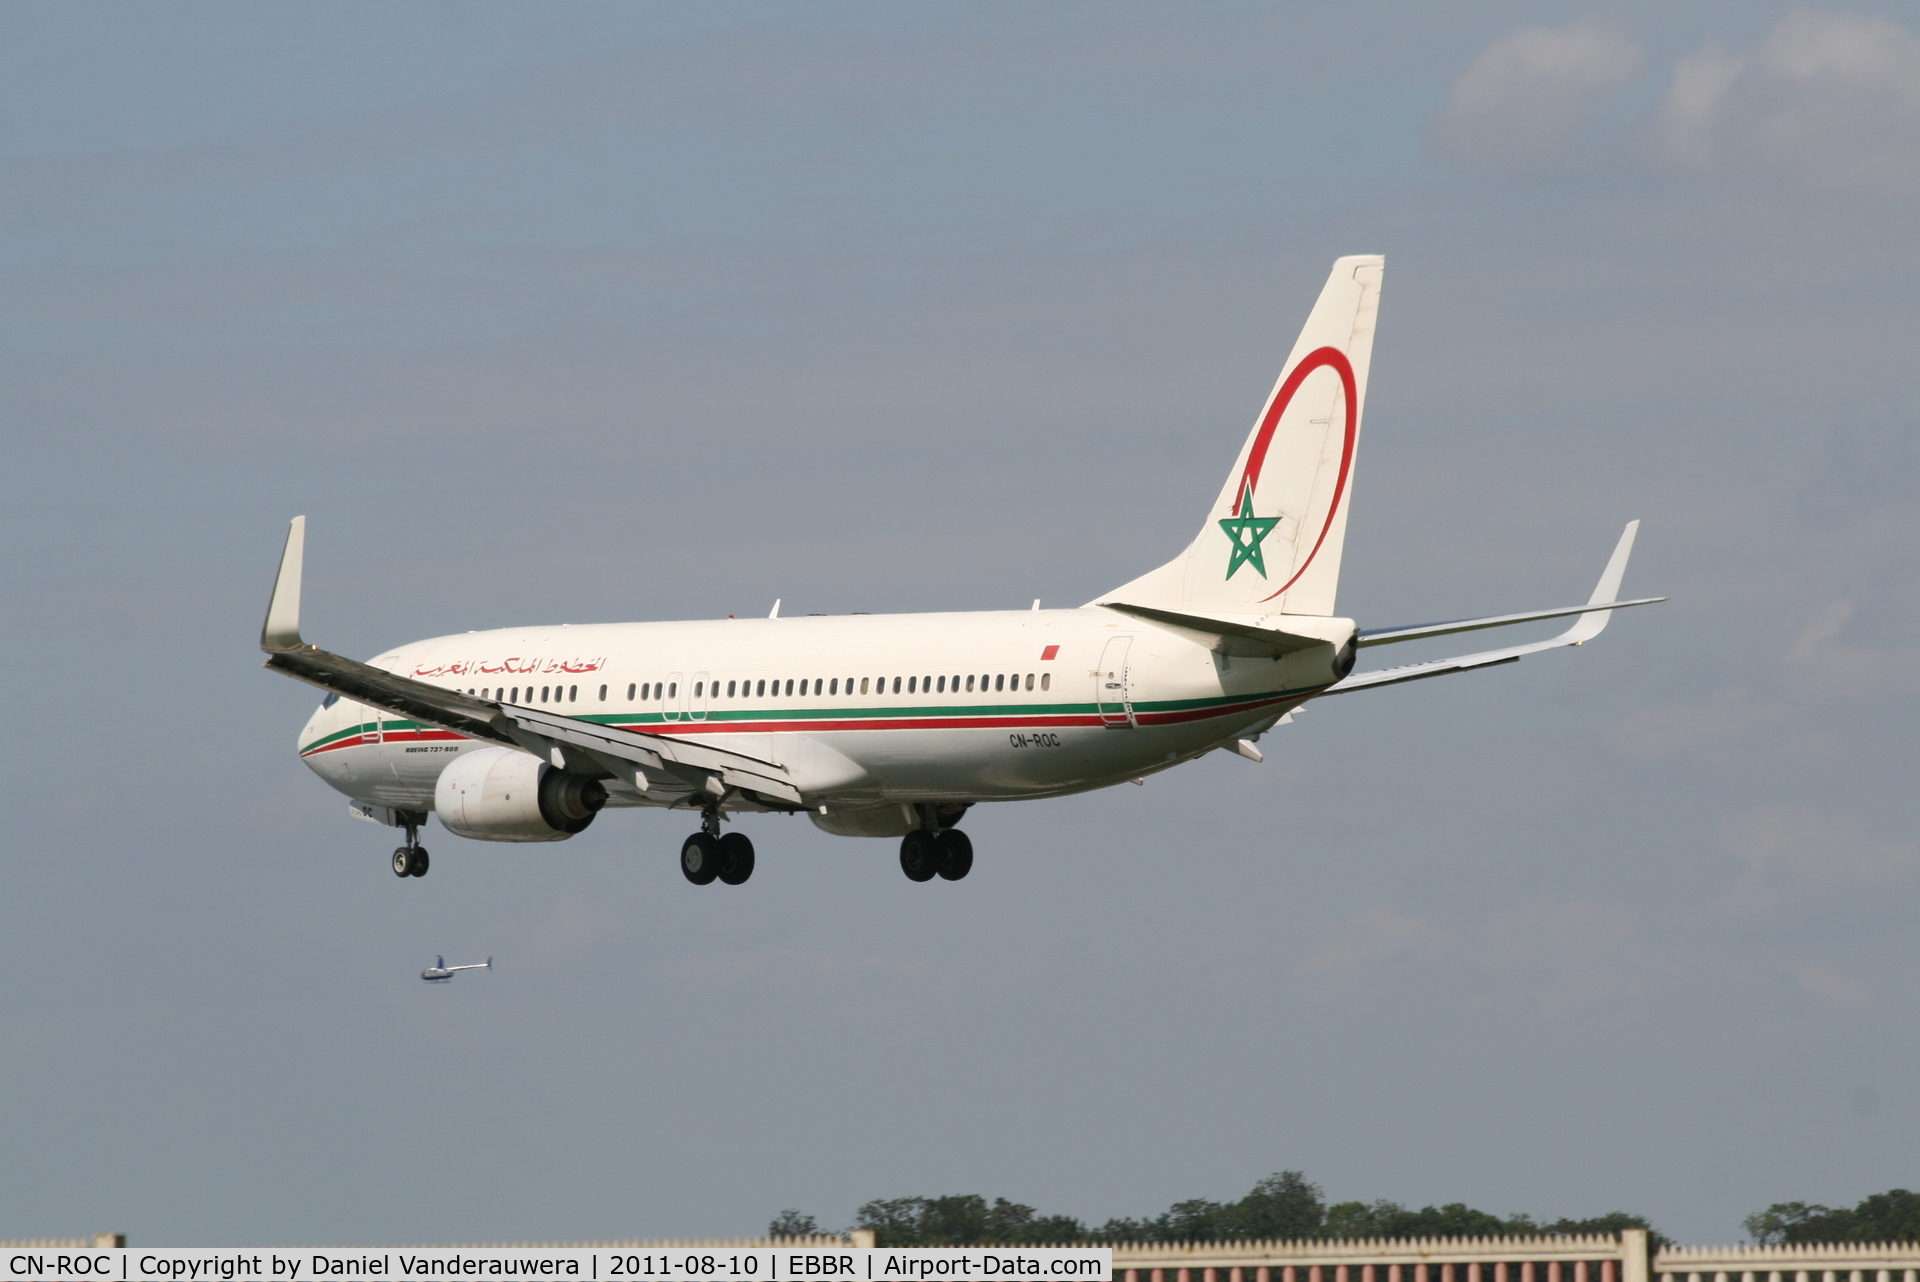 CN-ROC, 2005 Boeing 737-8B6 C/N 33061, Flight AT680 is descending to RWY 25L